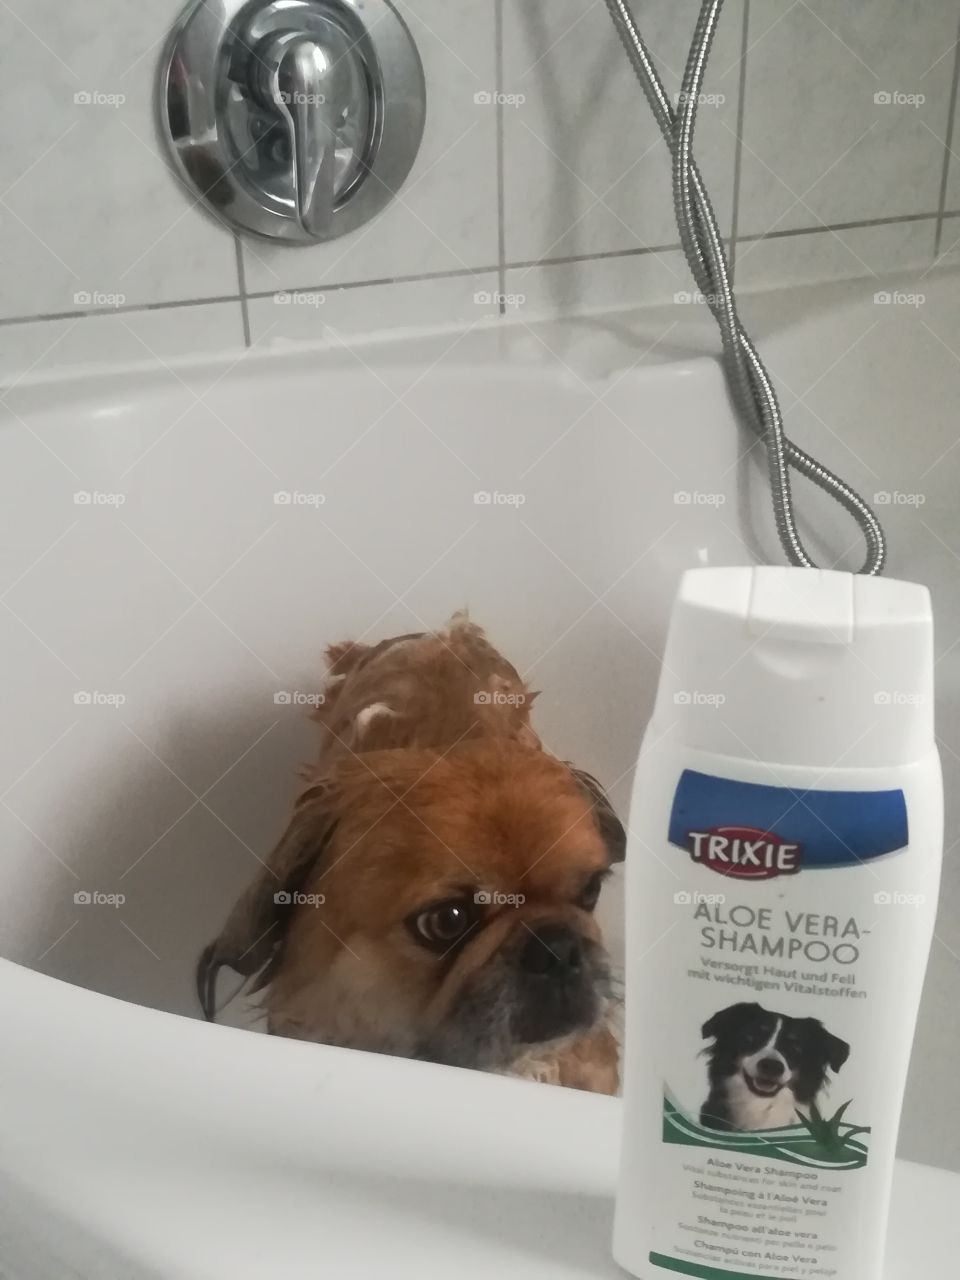 I wash my dog